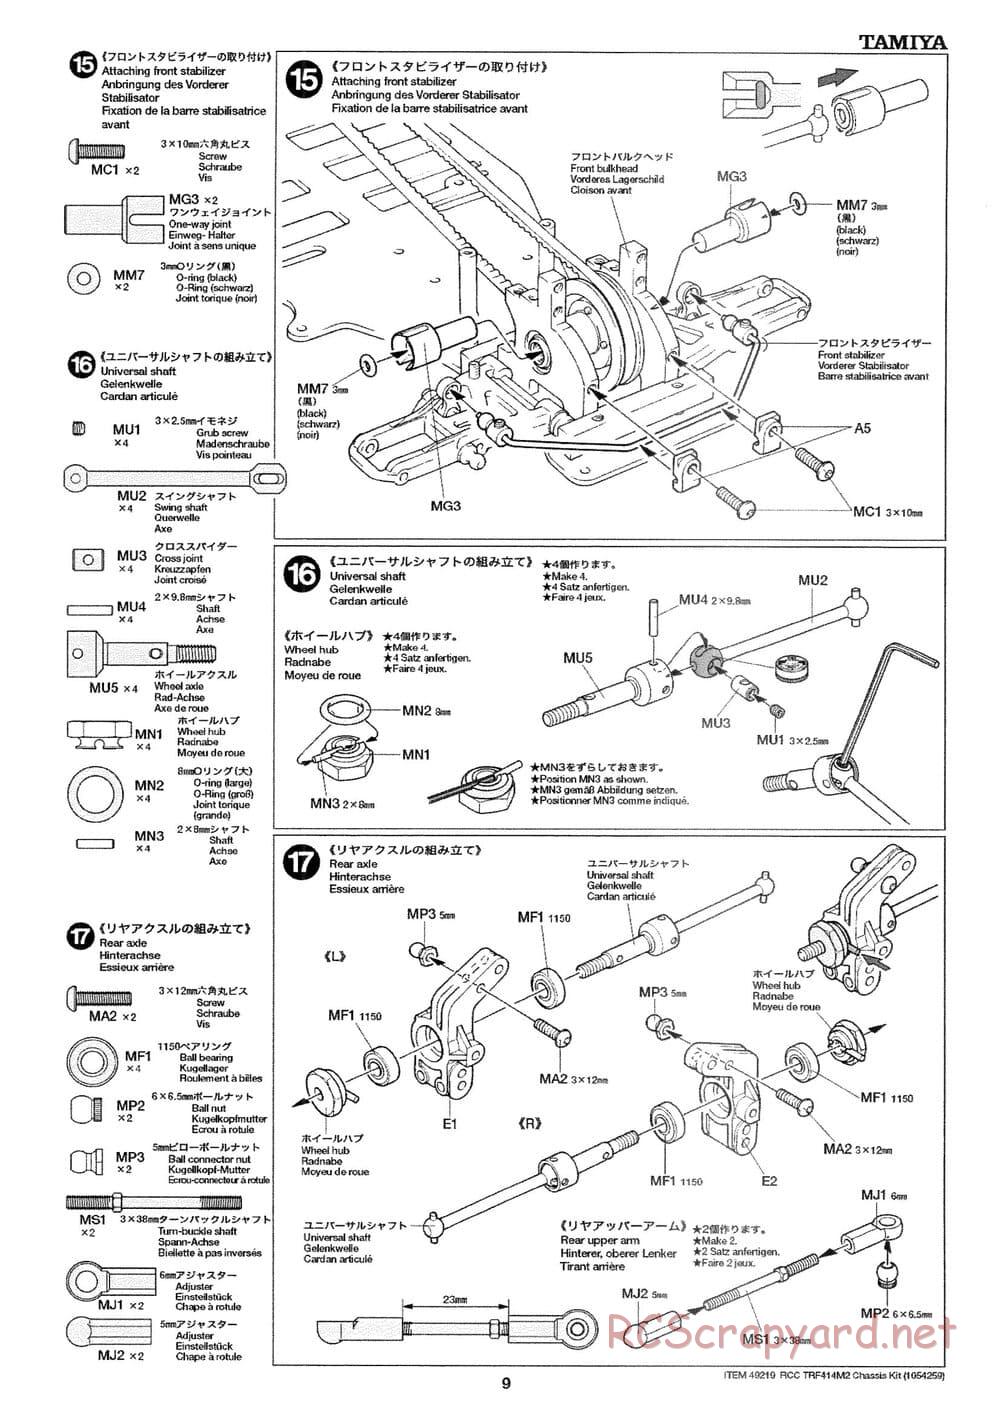 Tamiya - TRF414M II Chassis - Manual - Page 9